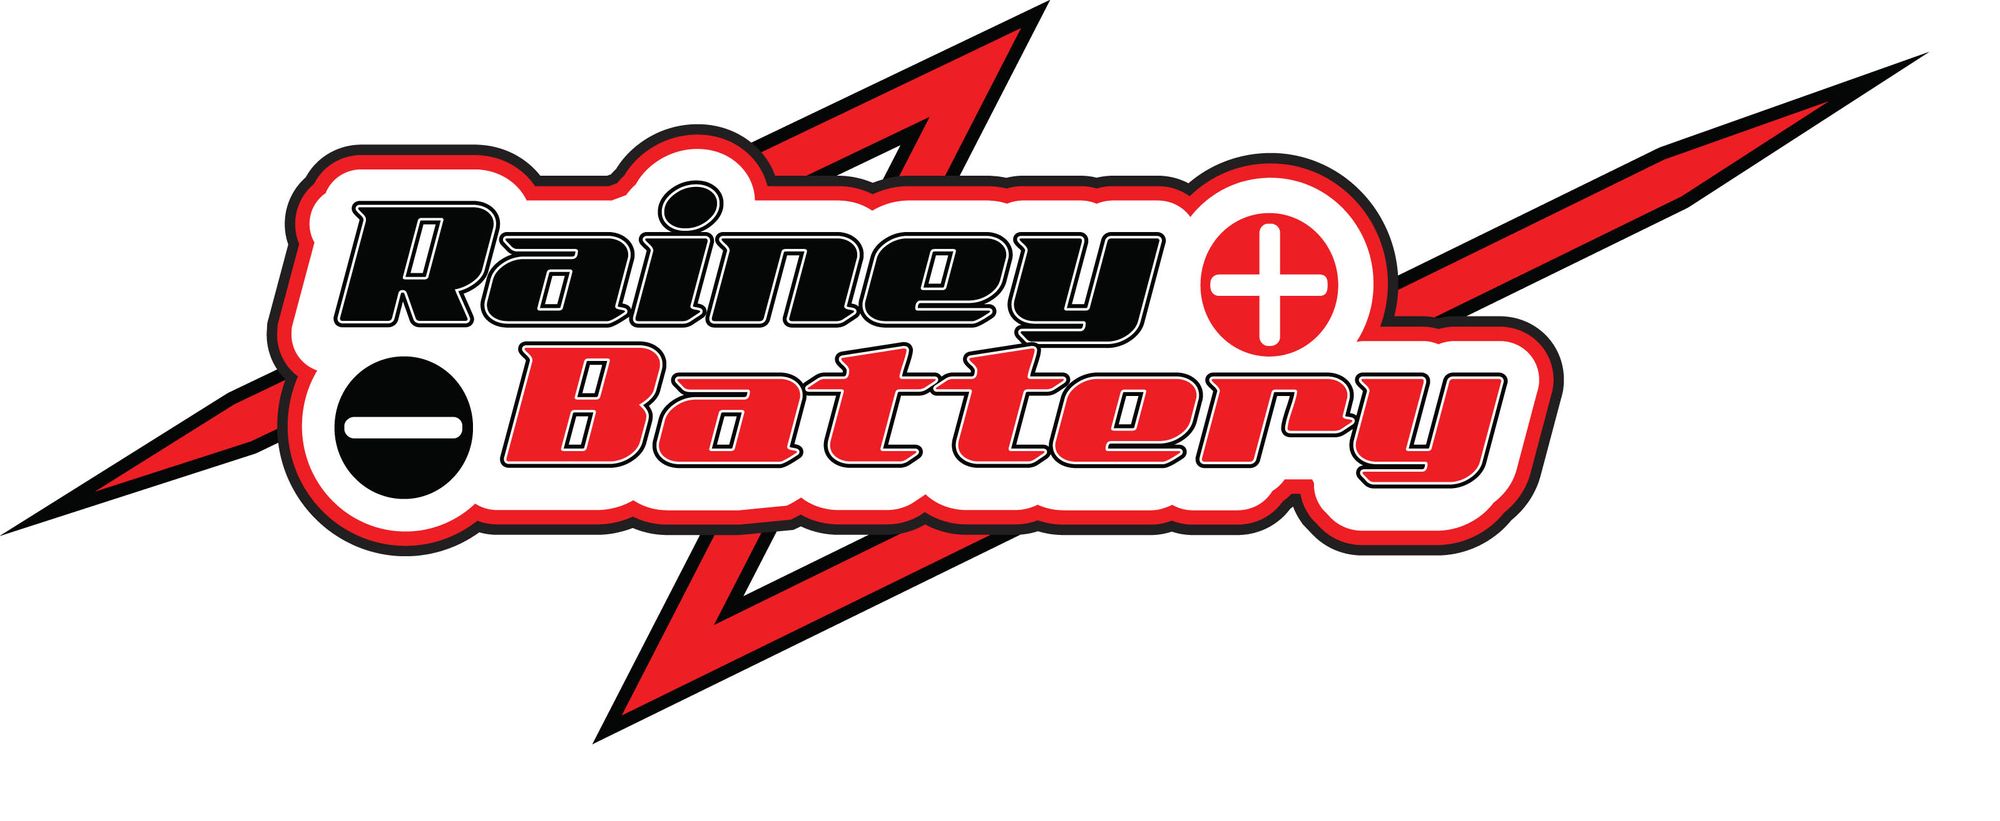 Rainey Battery logo